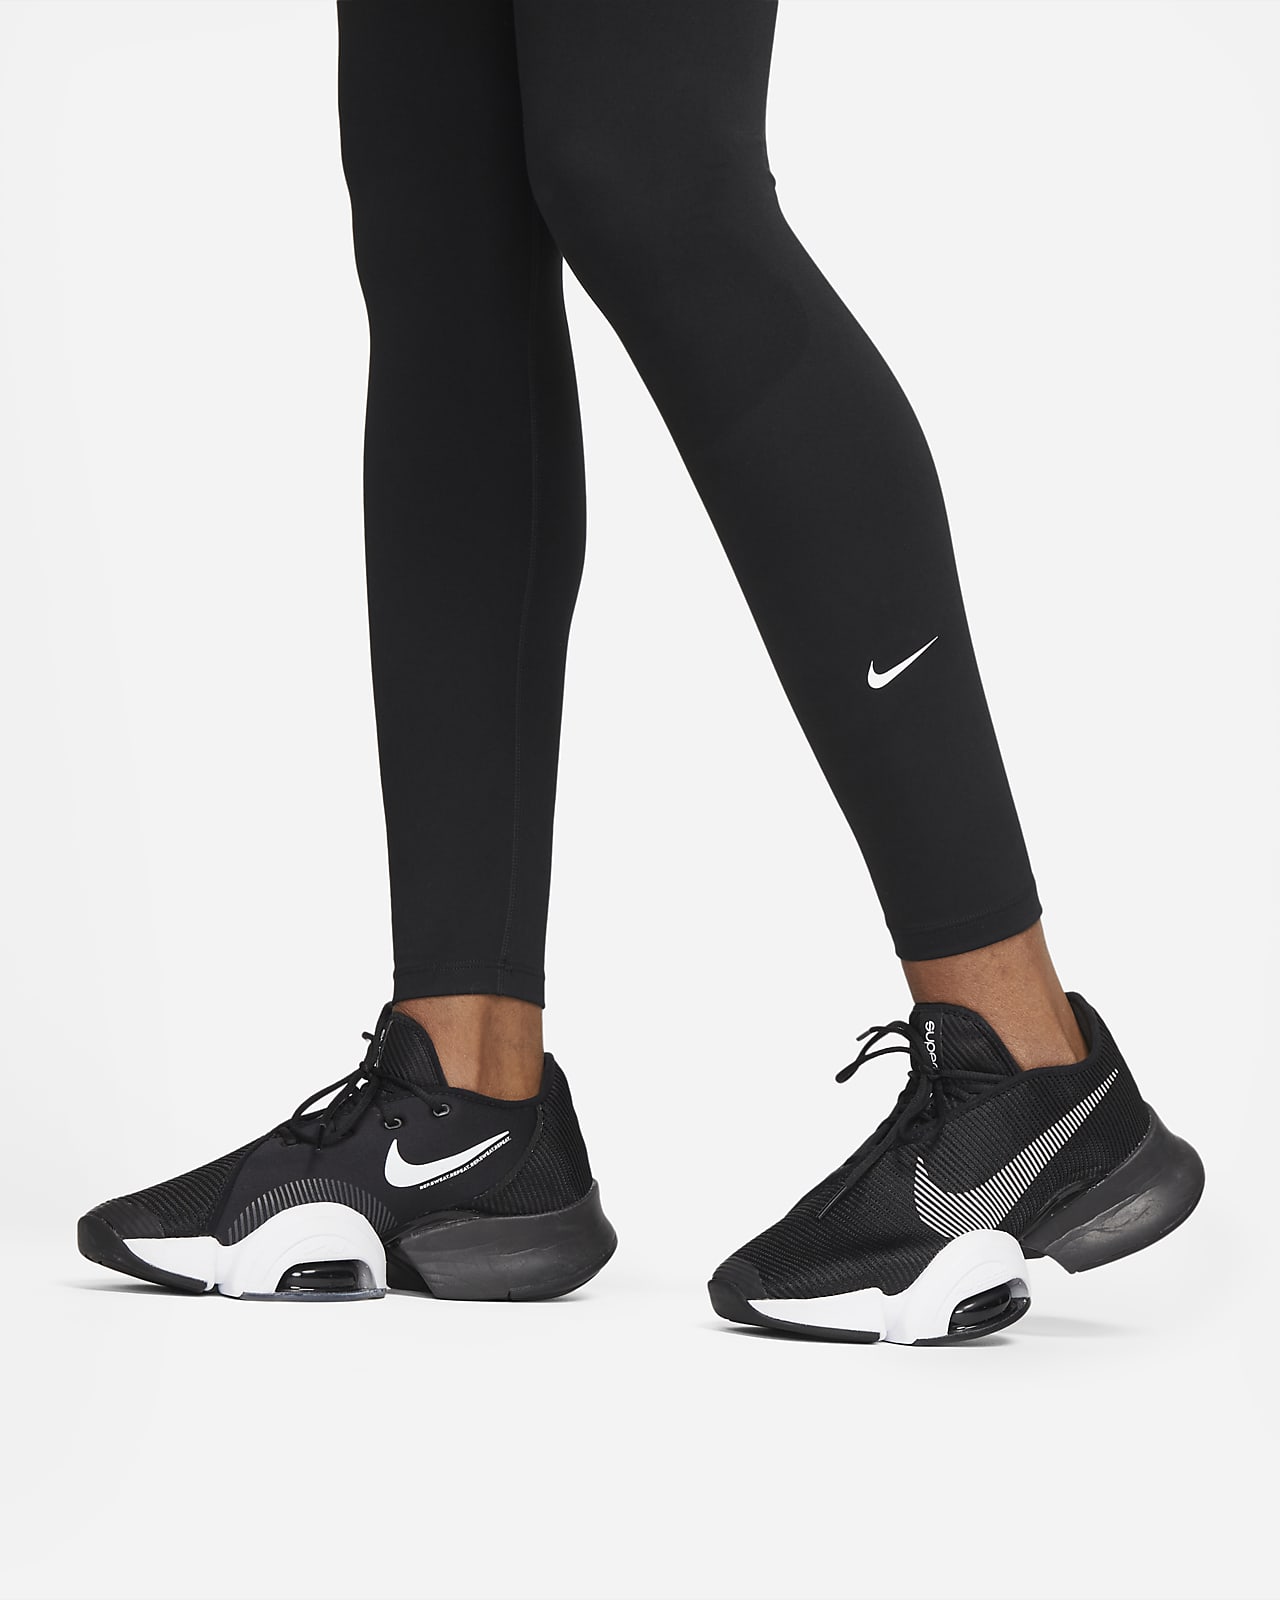 Legging taille haute Nike One pour femme. Nike LU